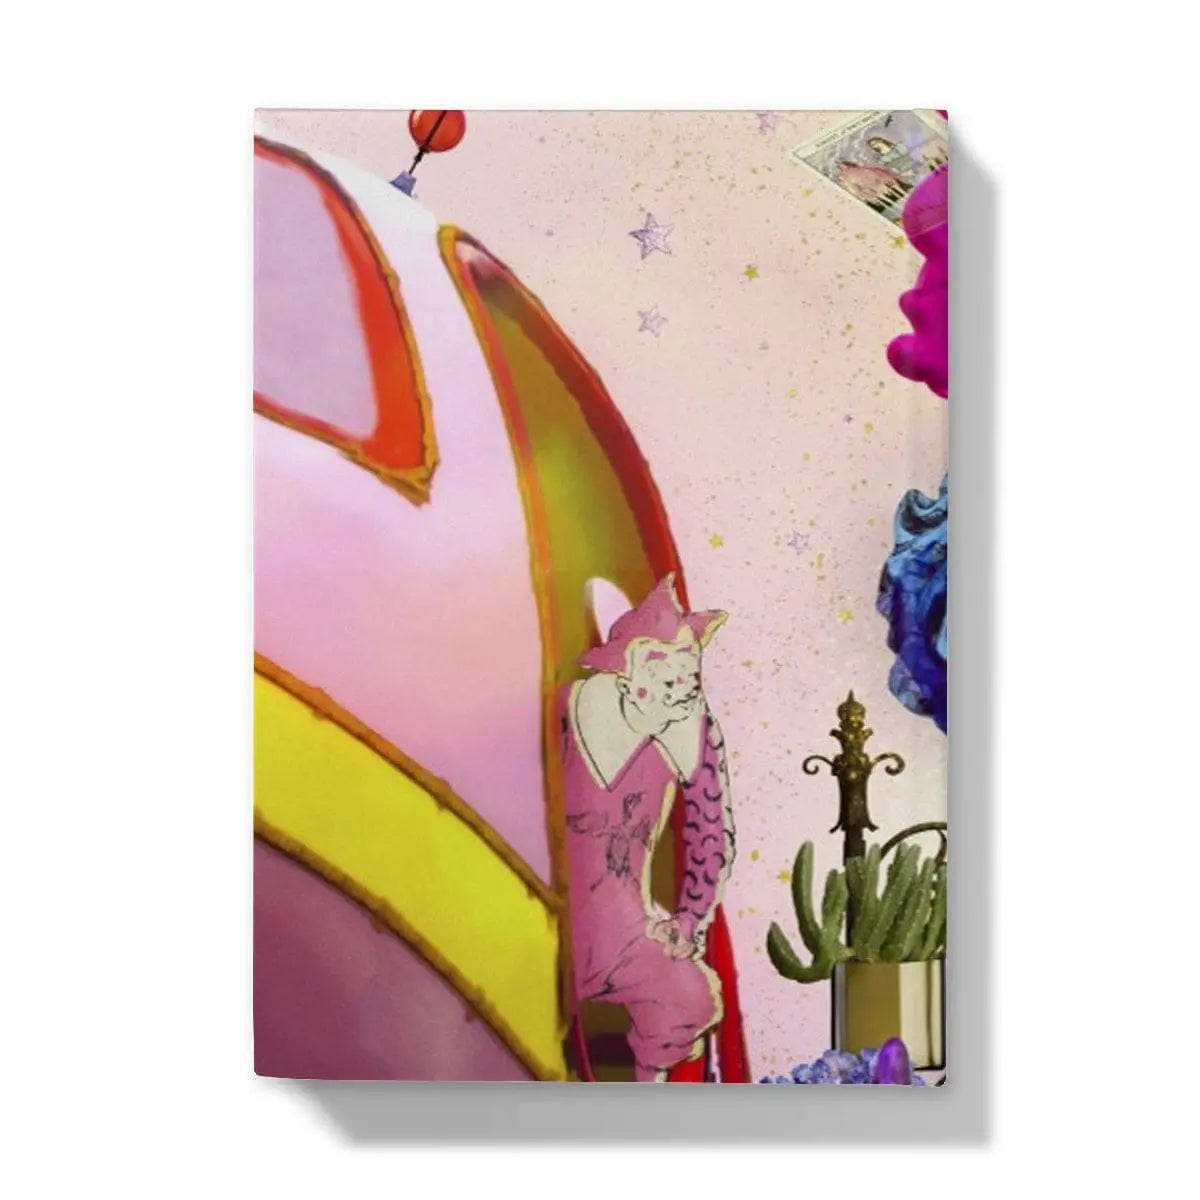 Darla The Divine Hardback Journal - Calendars Organizers & Planners - Aesthetic Art